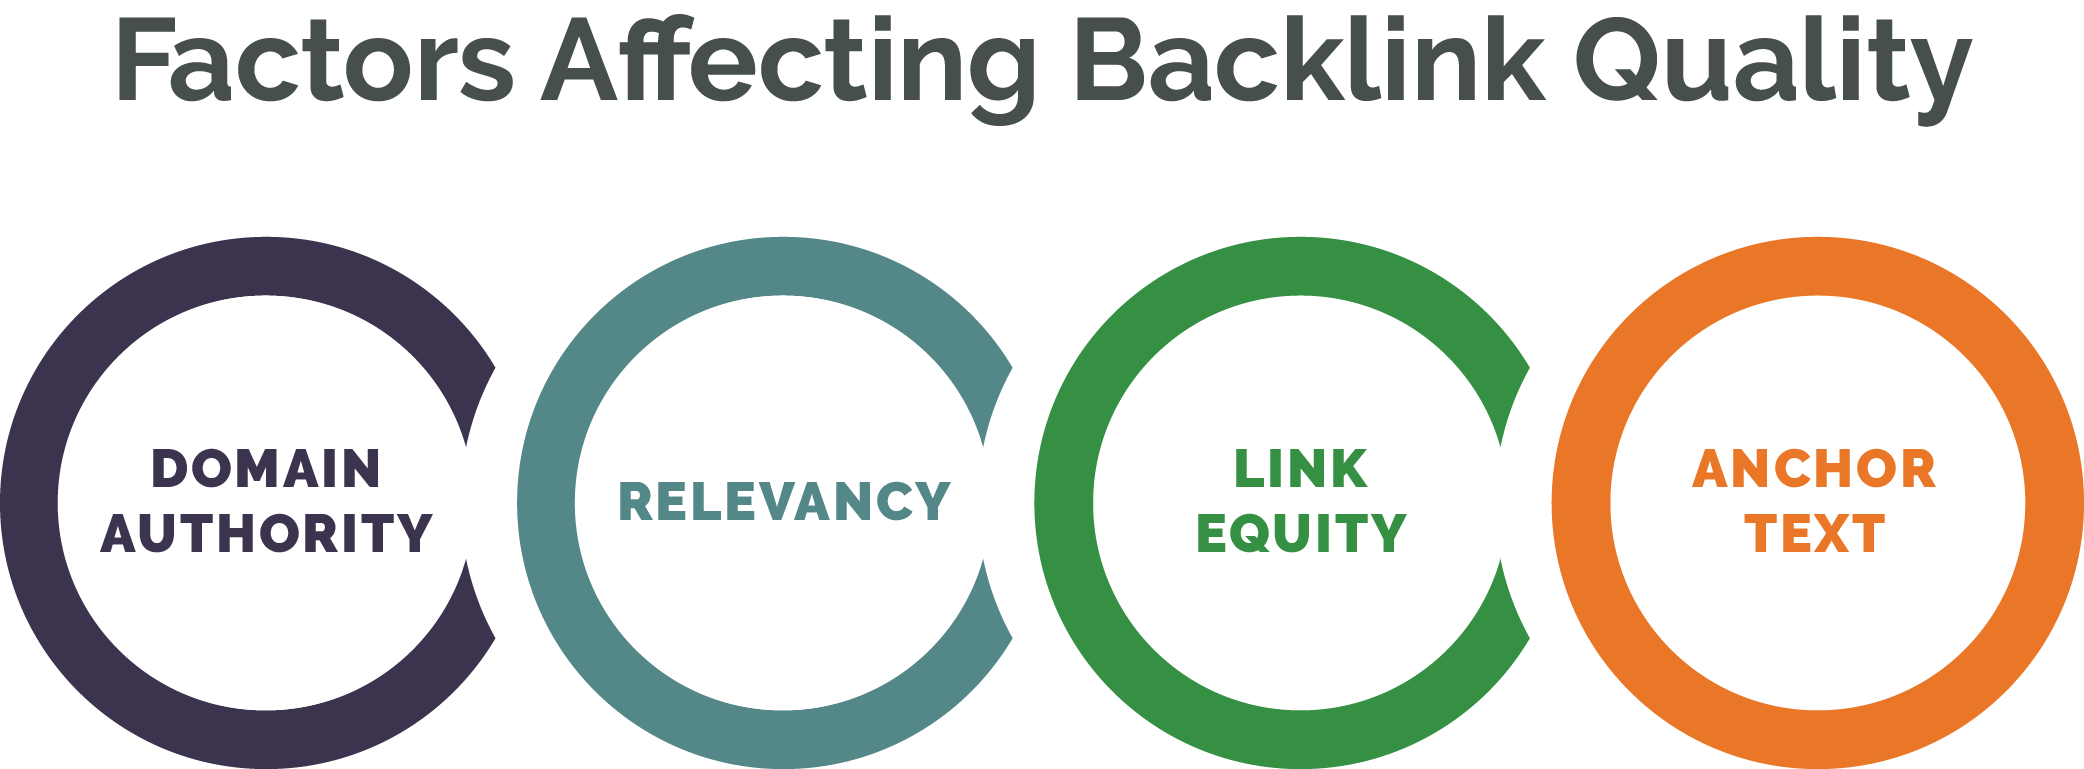 Factors affecting backlink quality